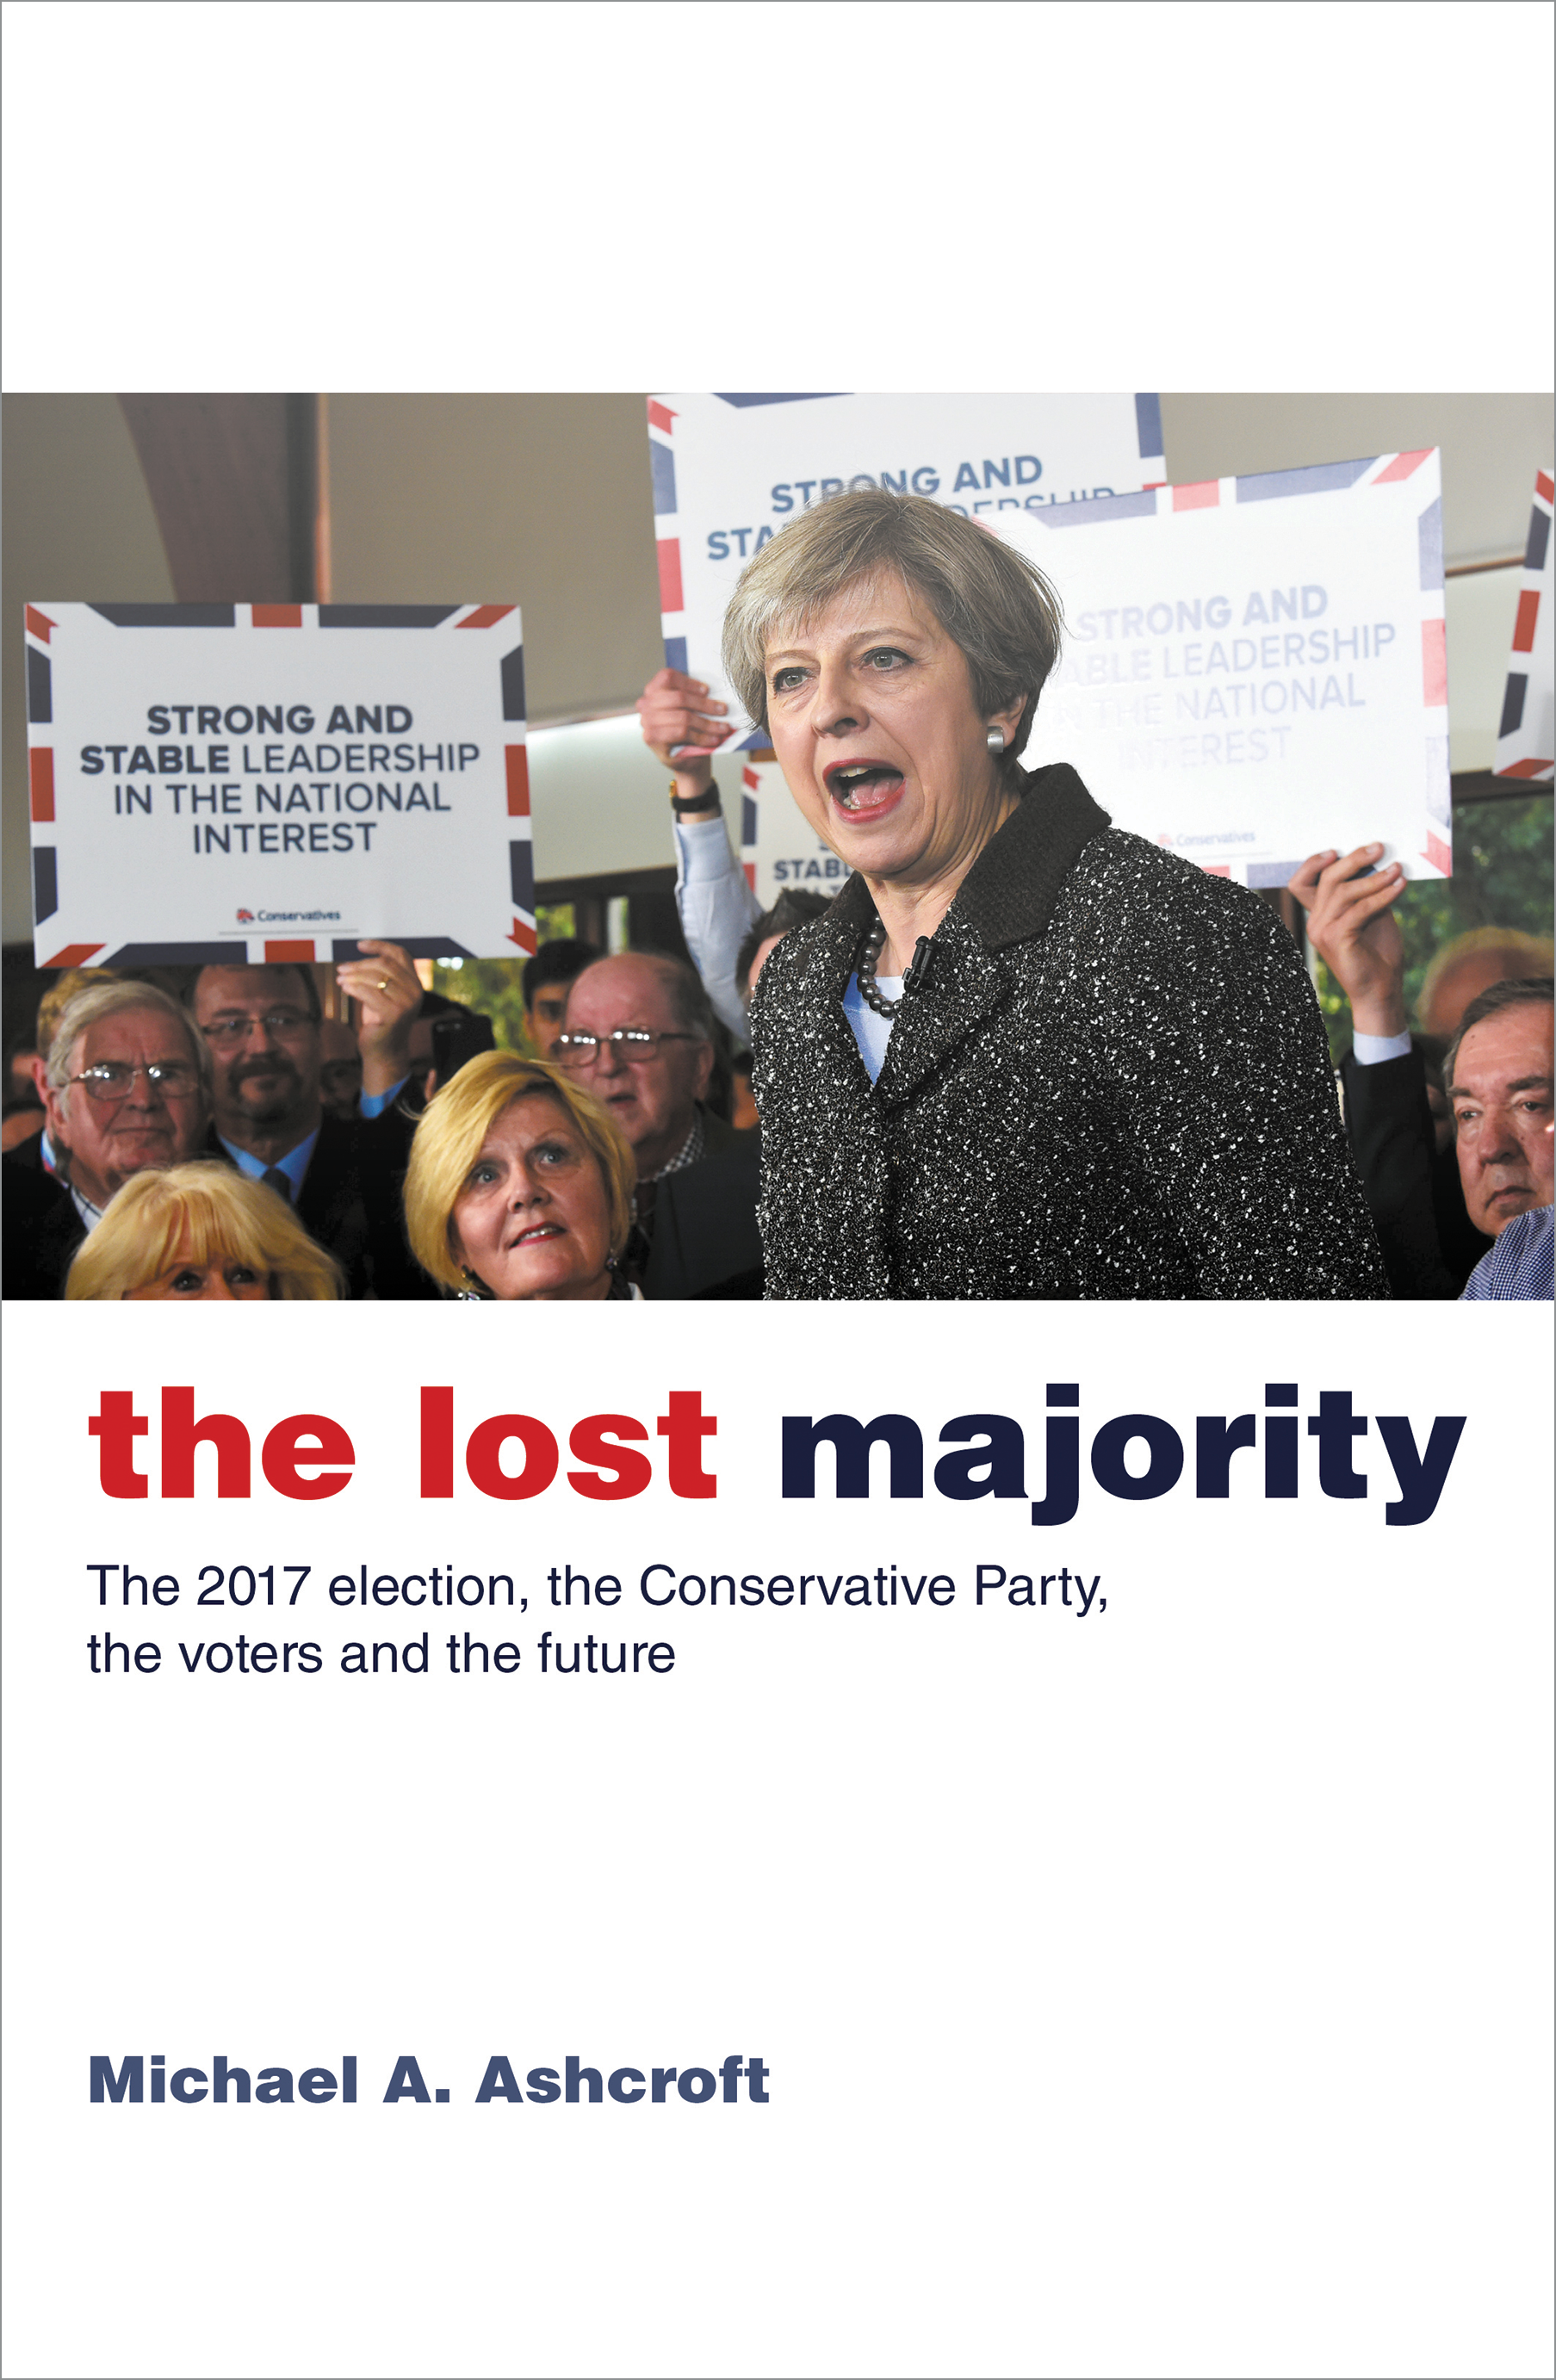 The Lost Majority